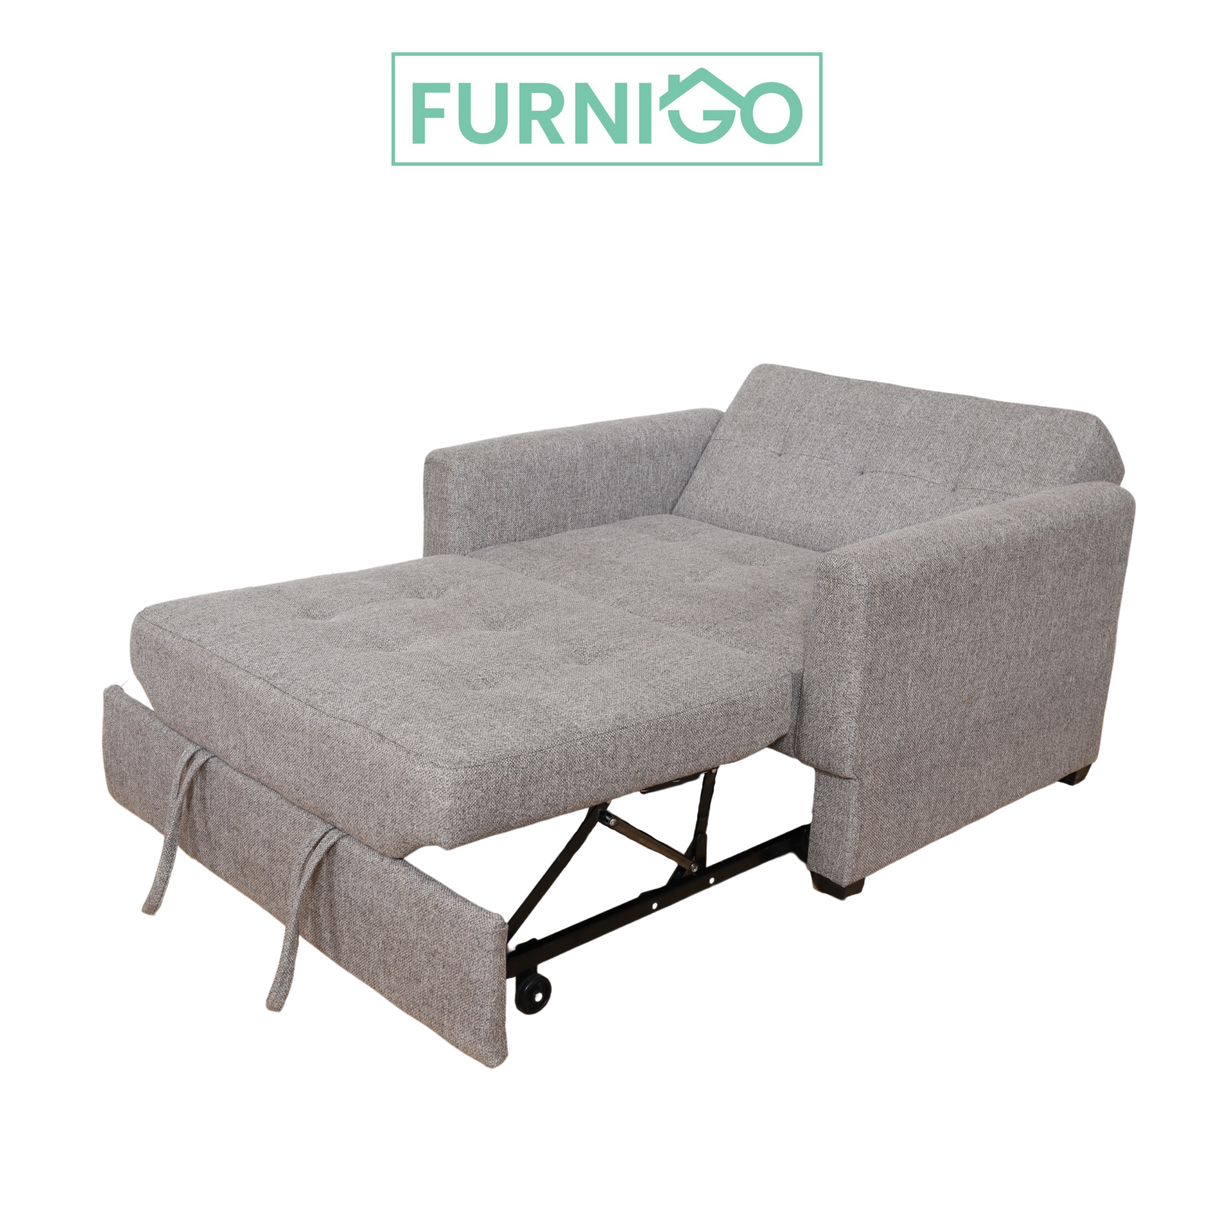 SHARON Pullout Fabric Sofabed Furnigo